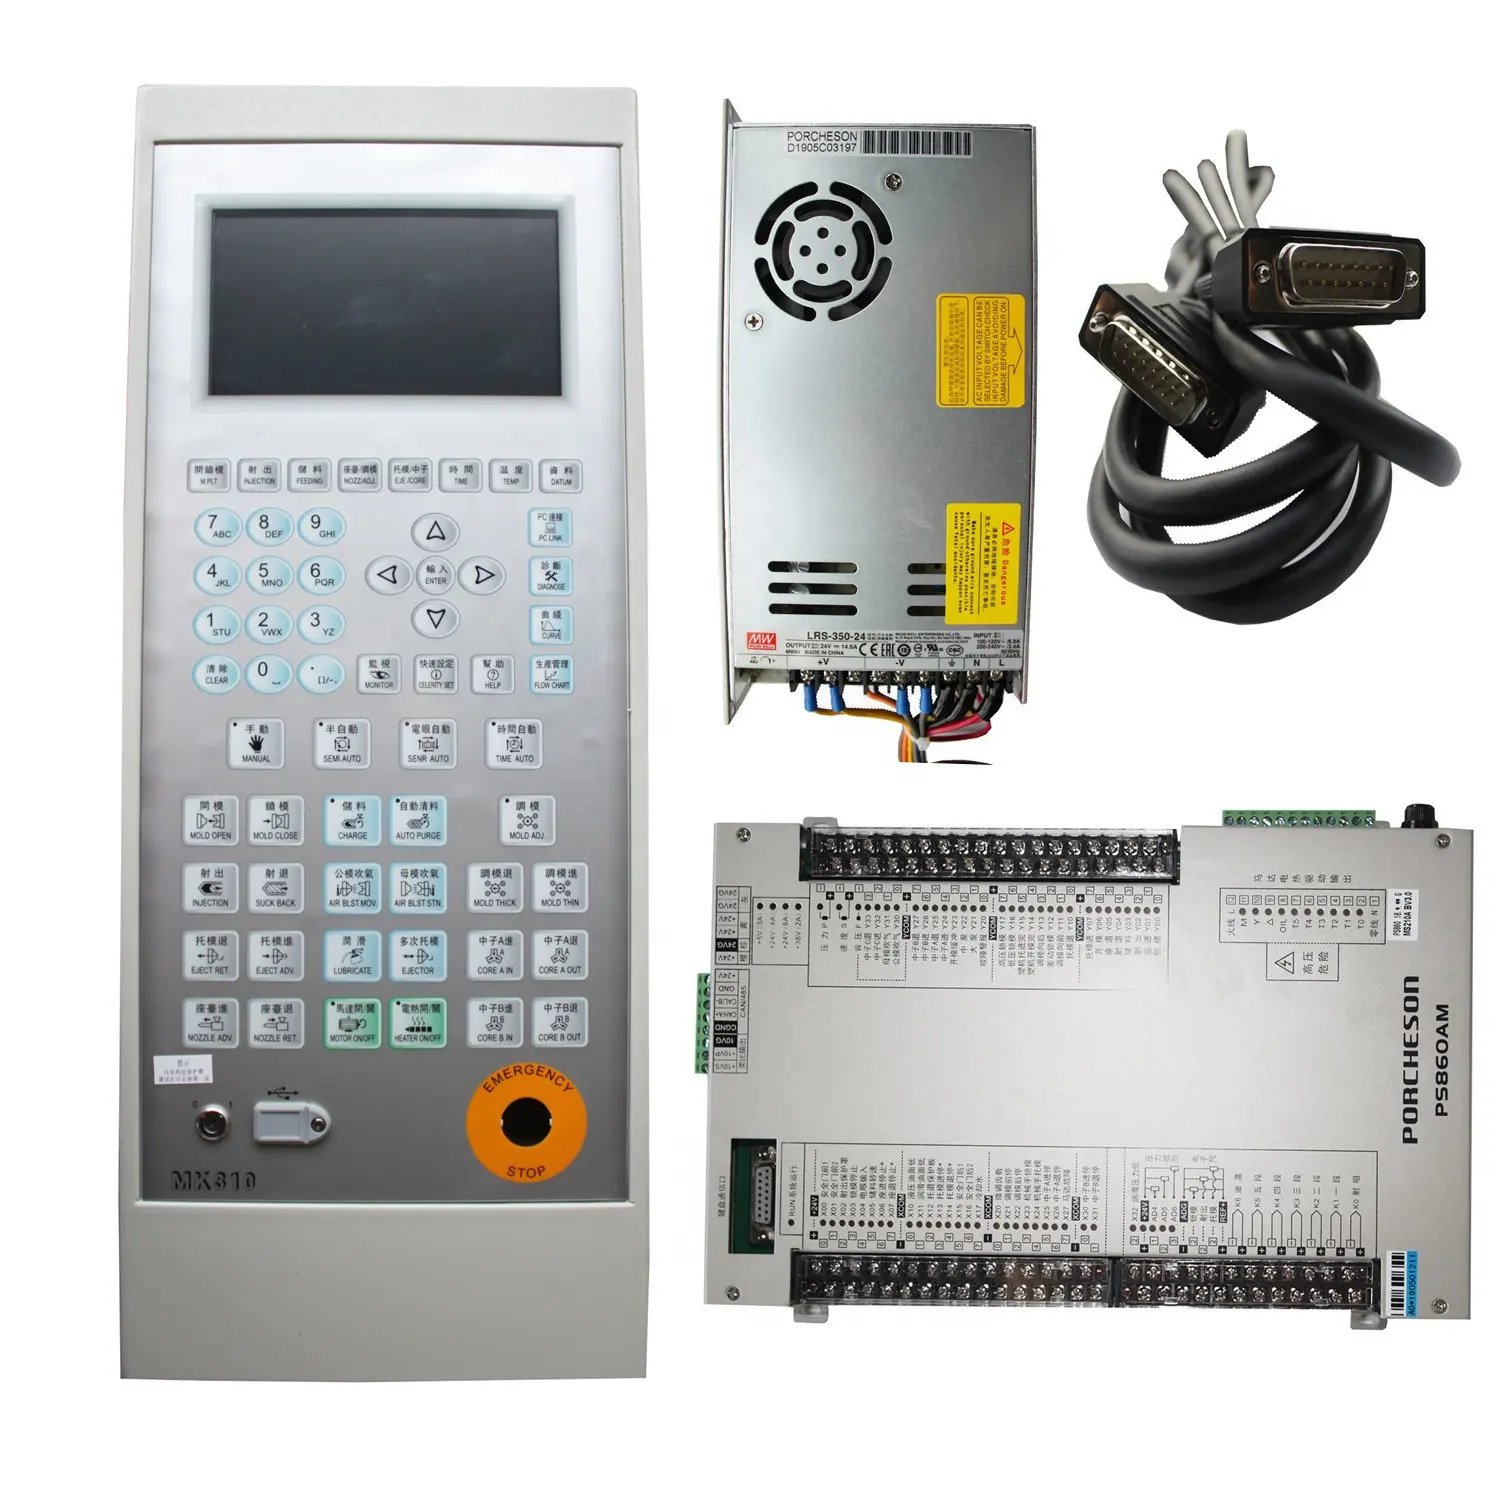 Porcheson-controlador MS700 MS220, MS700 MS250 PLC,PS860AM MS210A, sistema de control